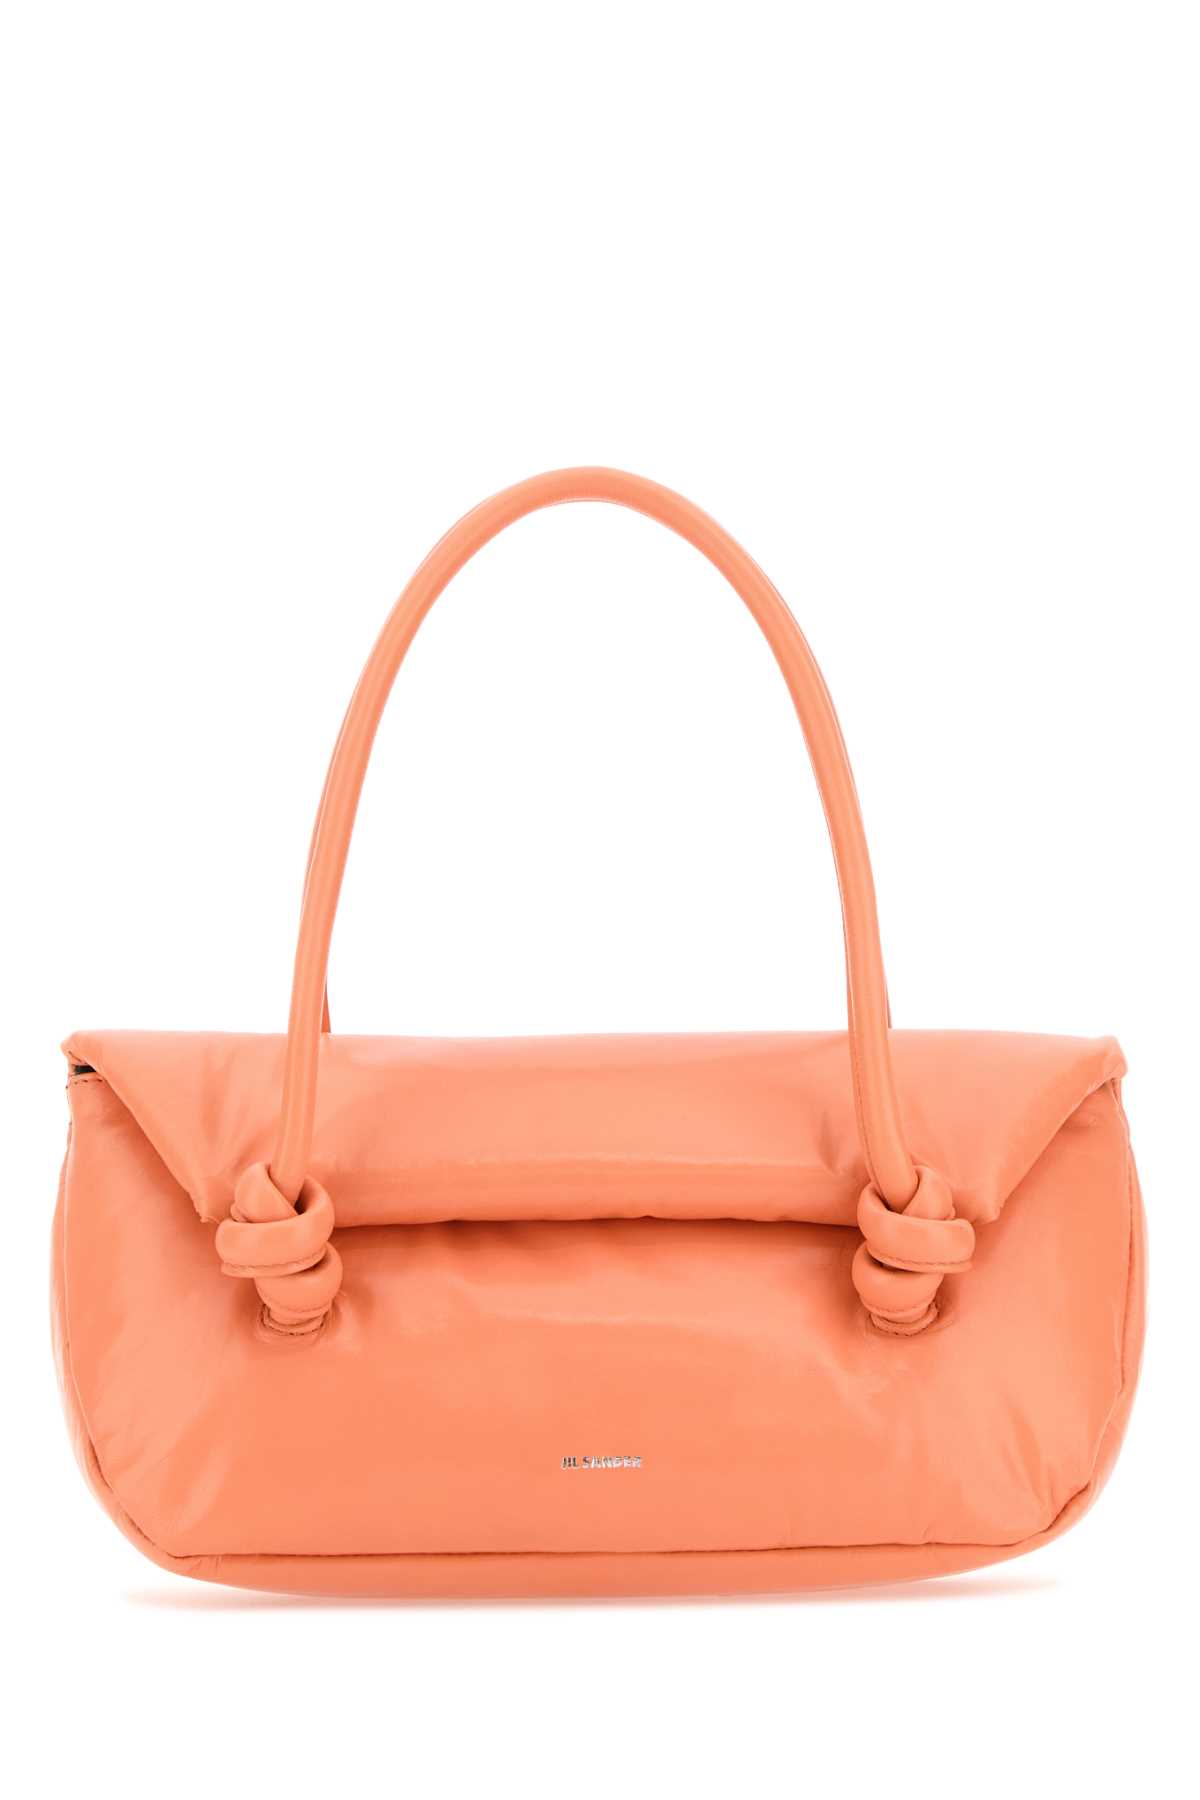 Peach Pink Leather Small Knot Handle Handbag